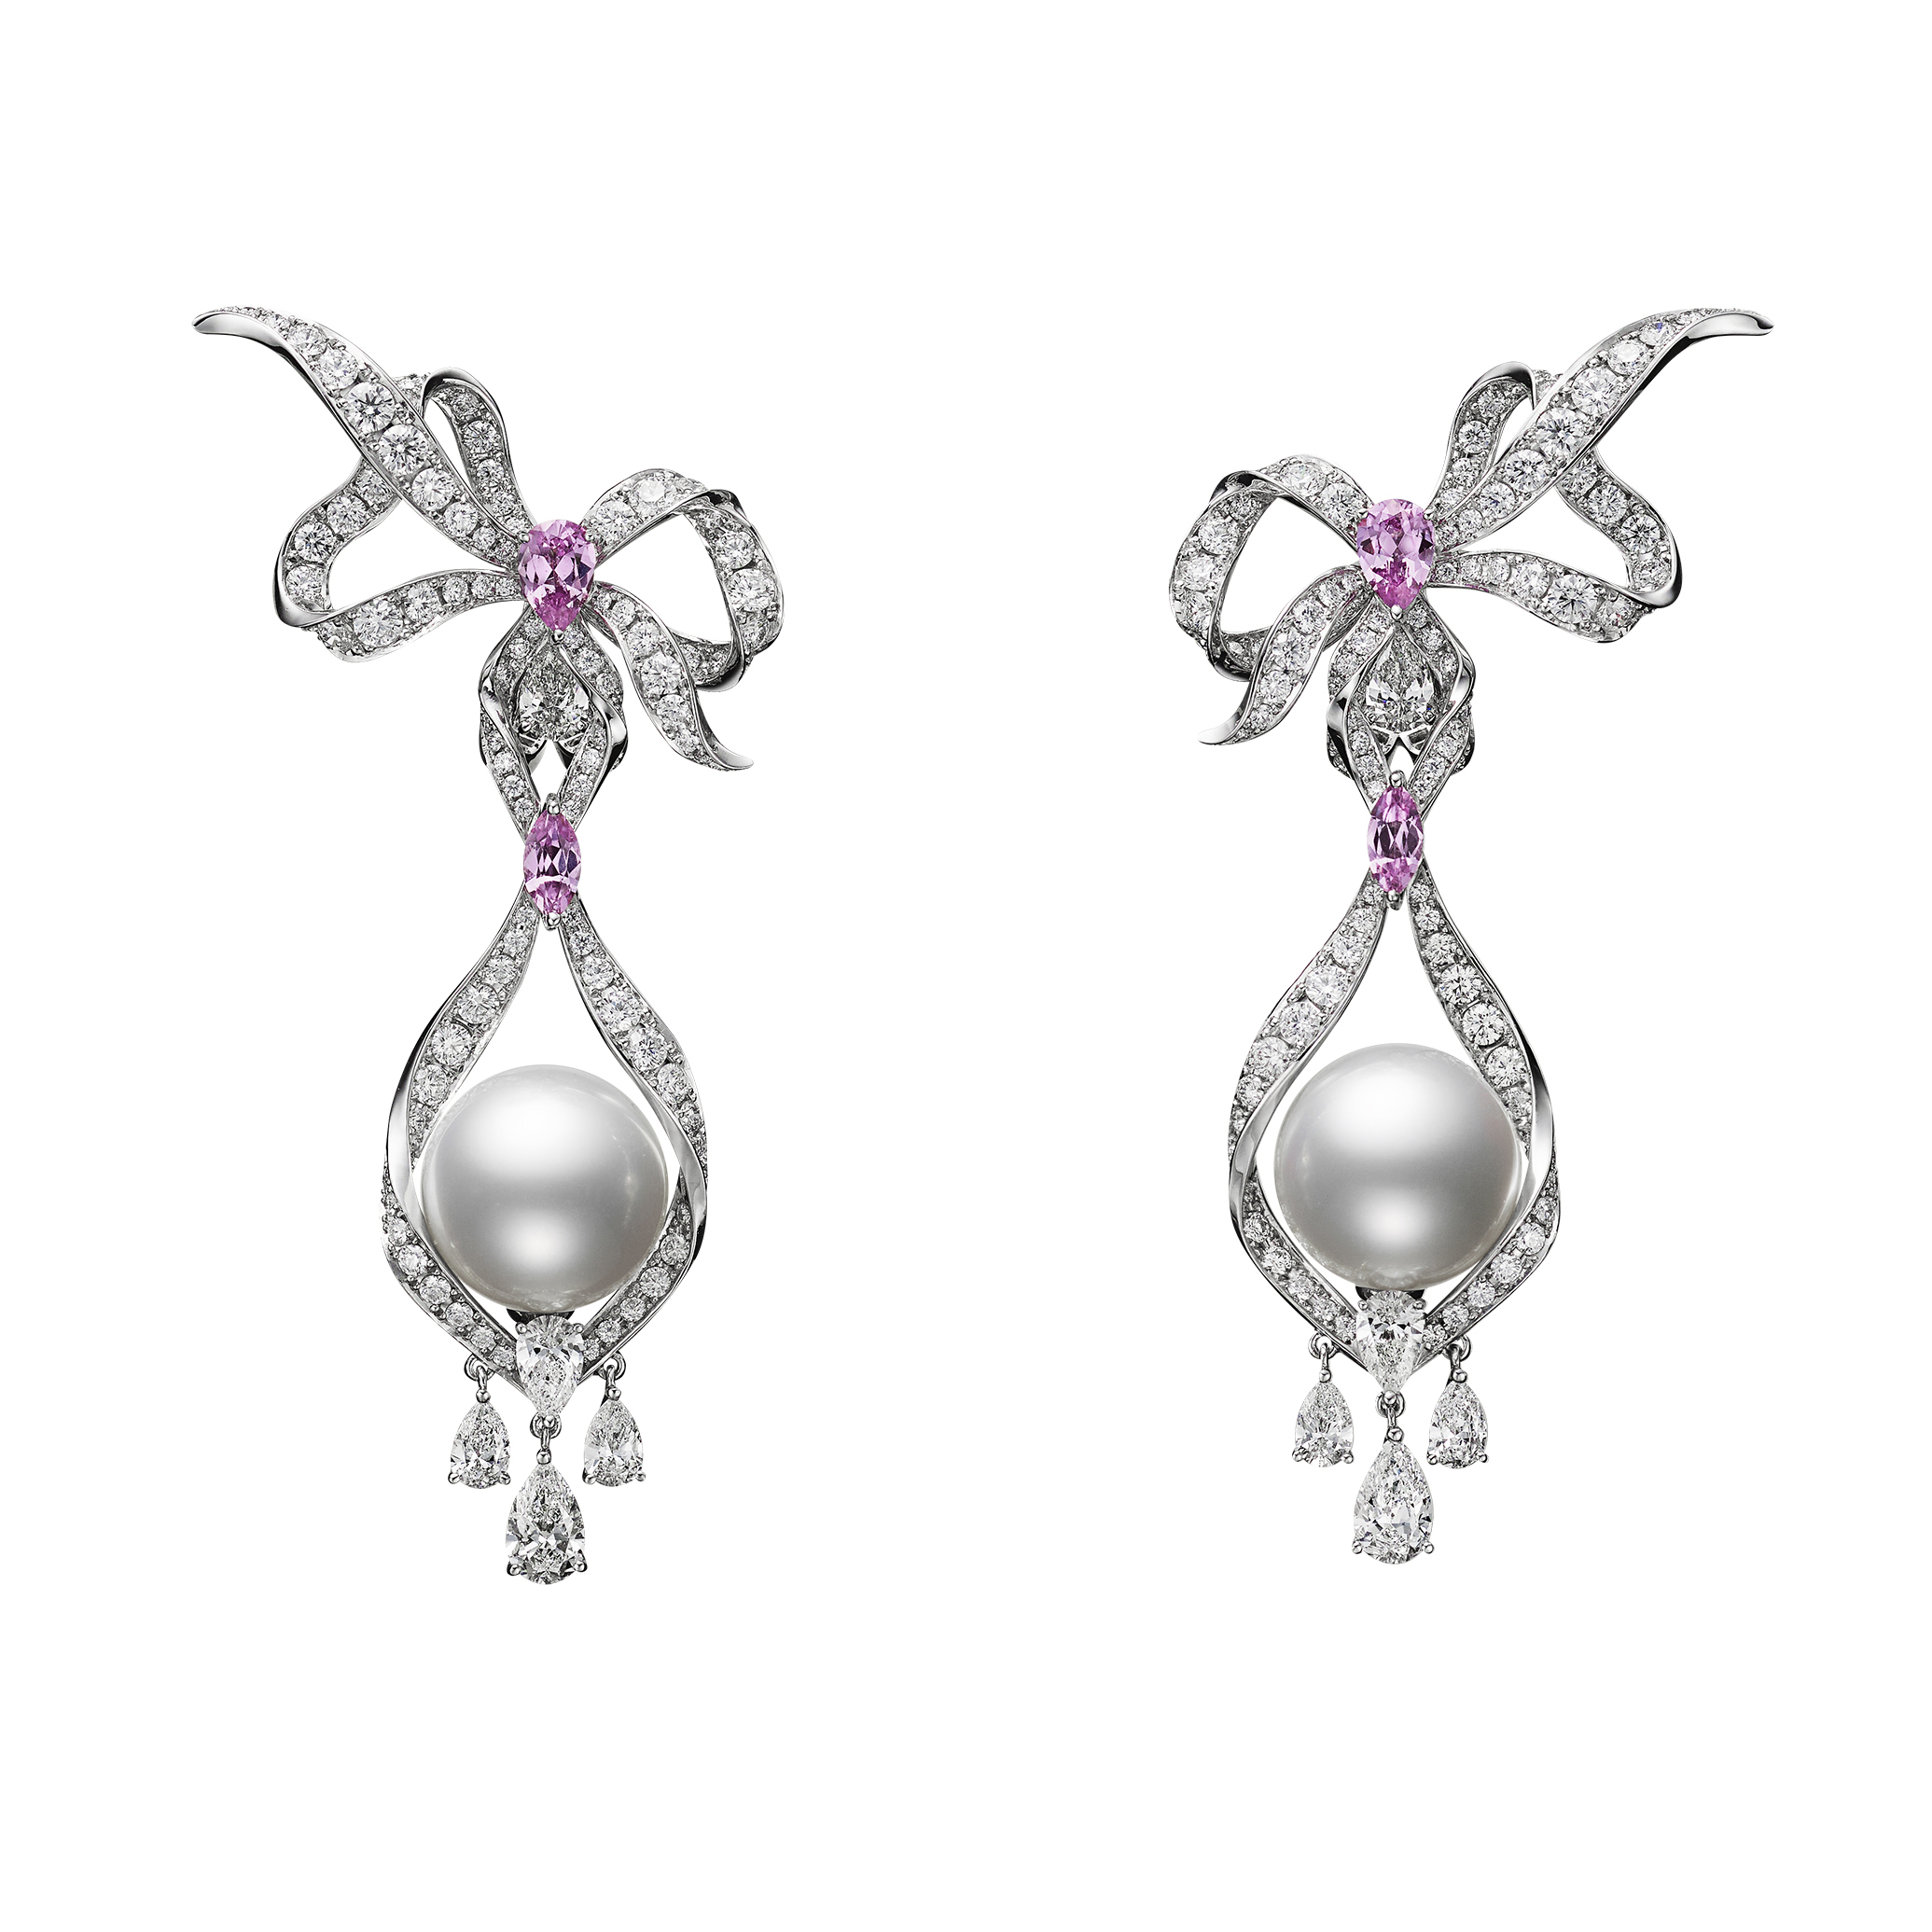 The Bows飘逸缎带洛可可风格彩宝耳环，18K白金镶嵌白南洋珍珠、蓝宝石和钻石。图／MIKIMOTO提供